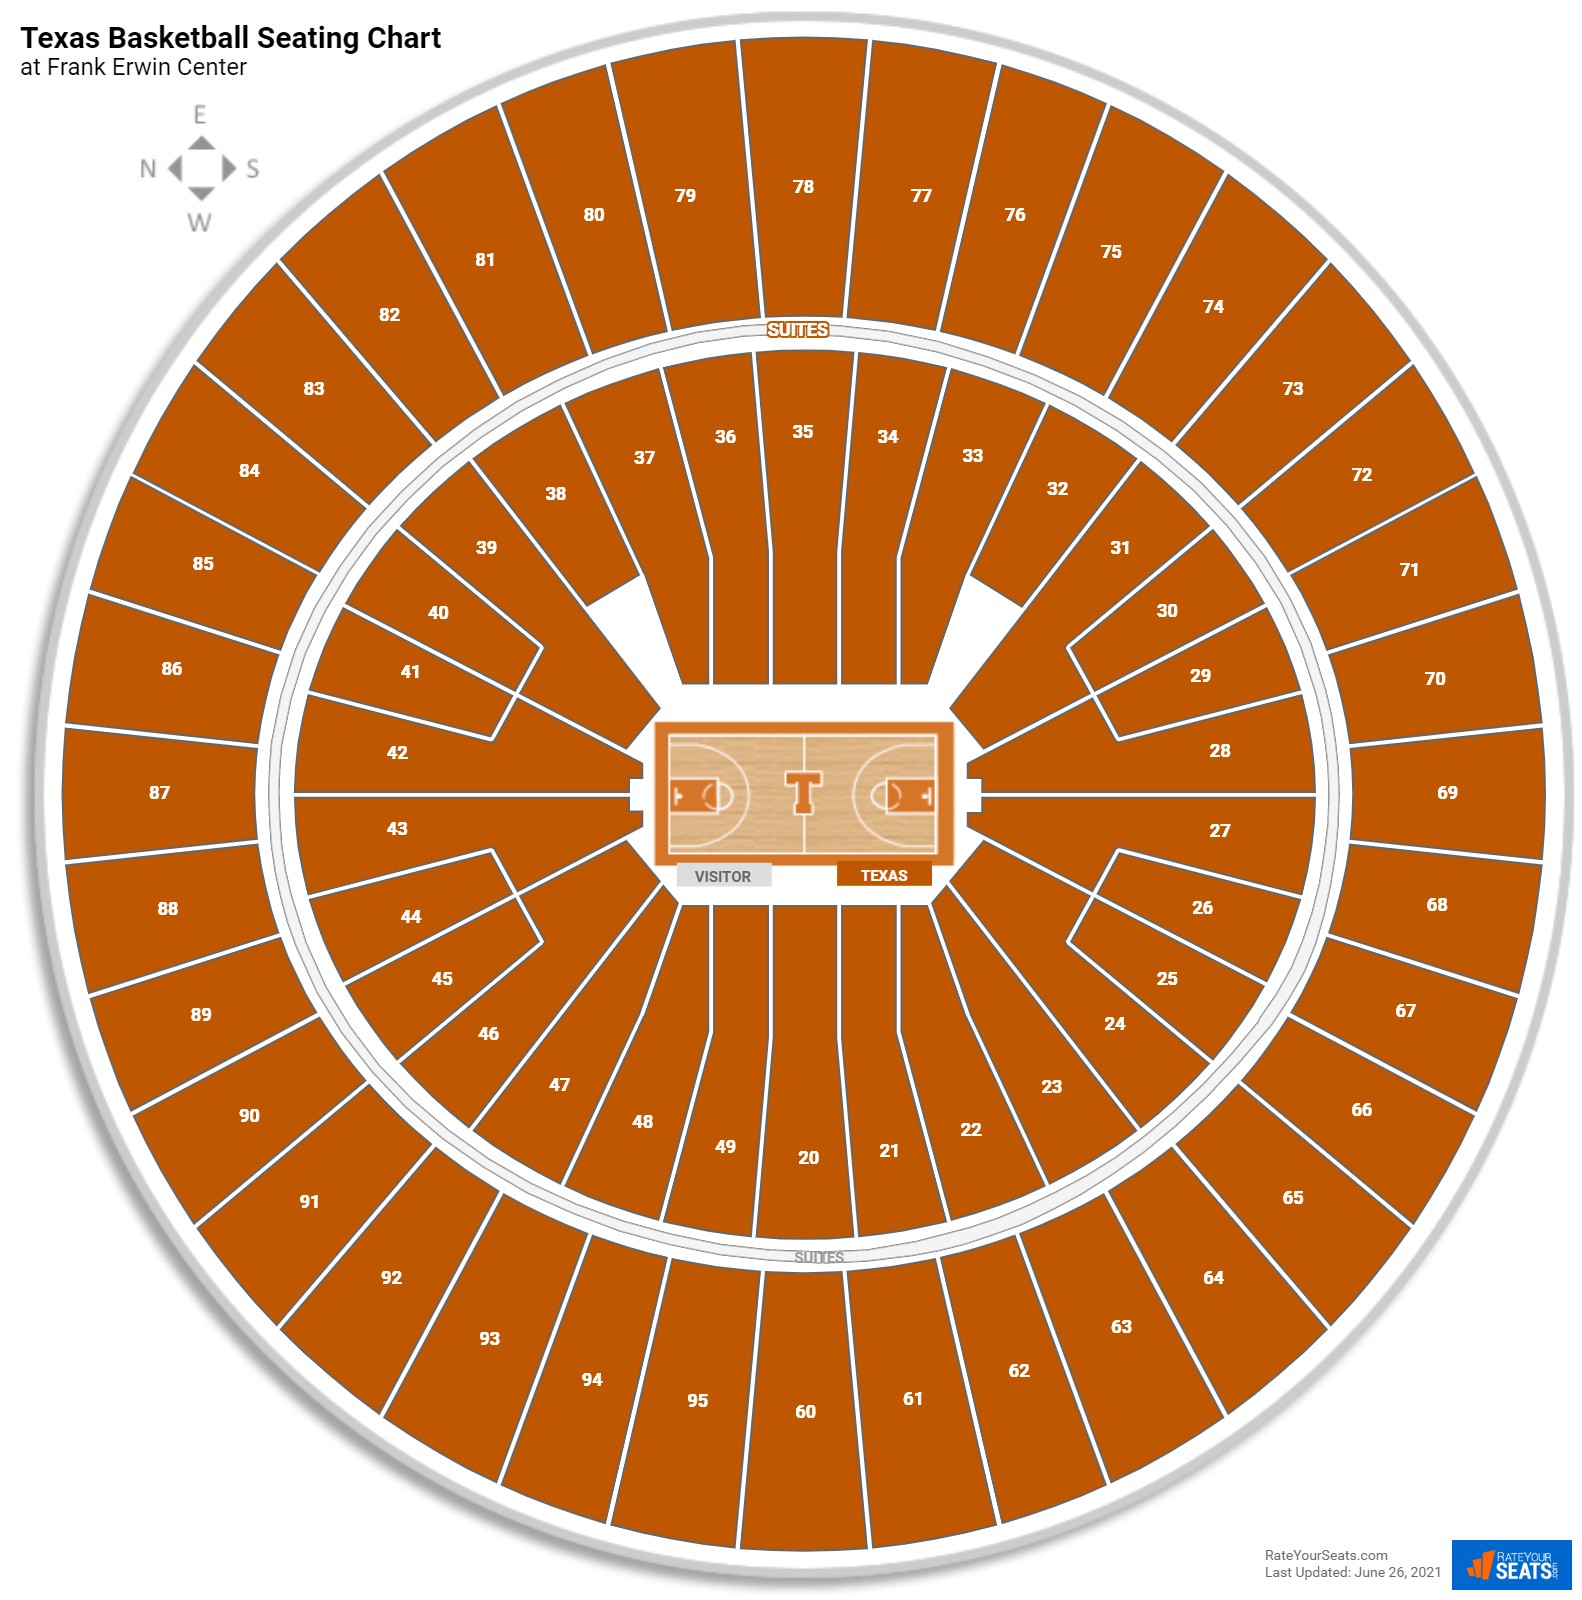 Texas Longhorns Seating Chart at Frank Erwin Center